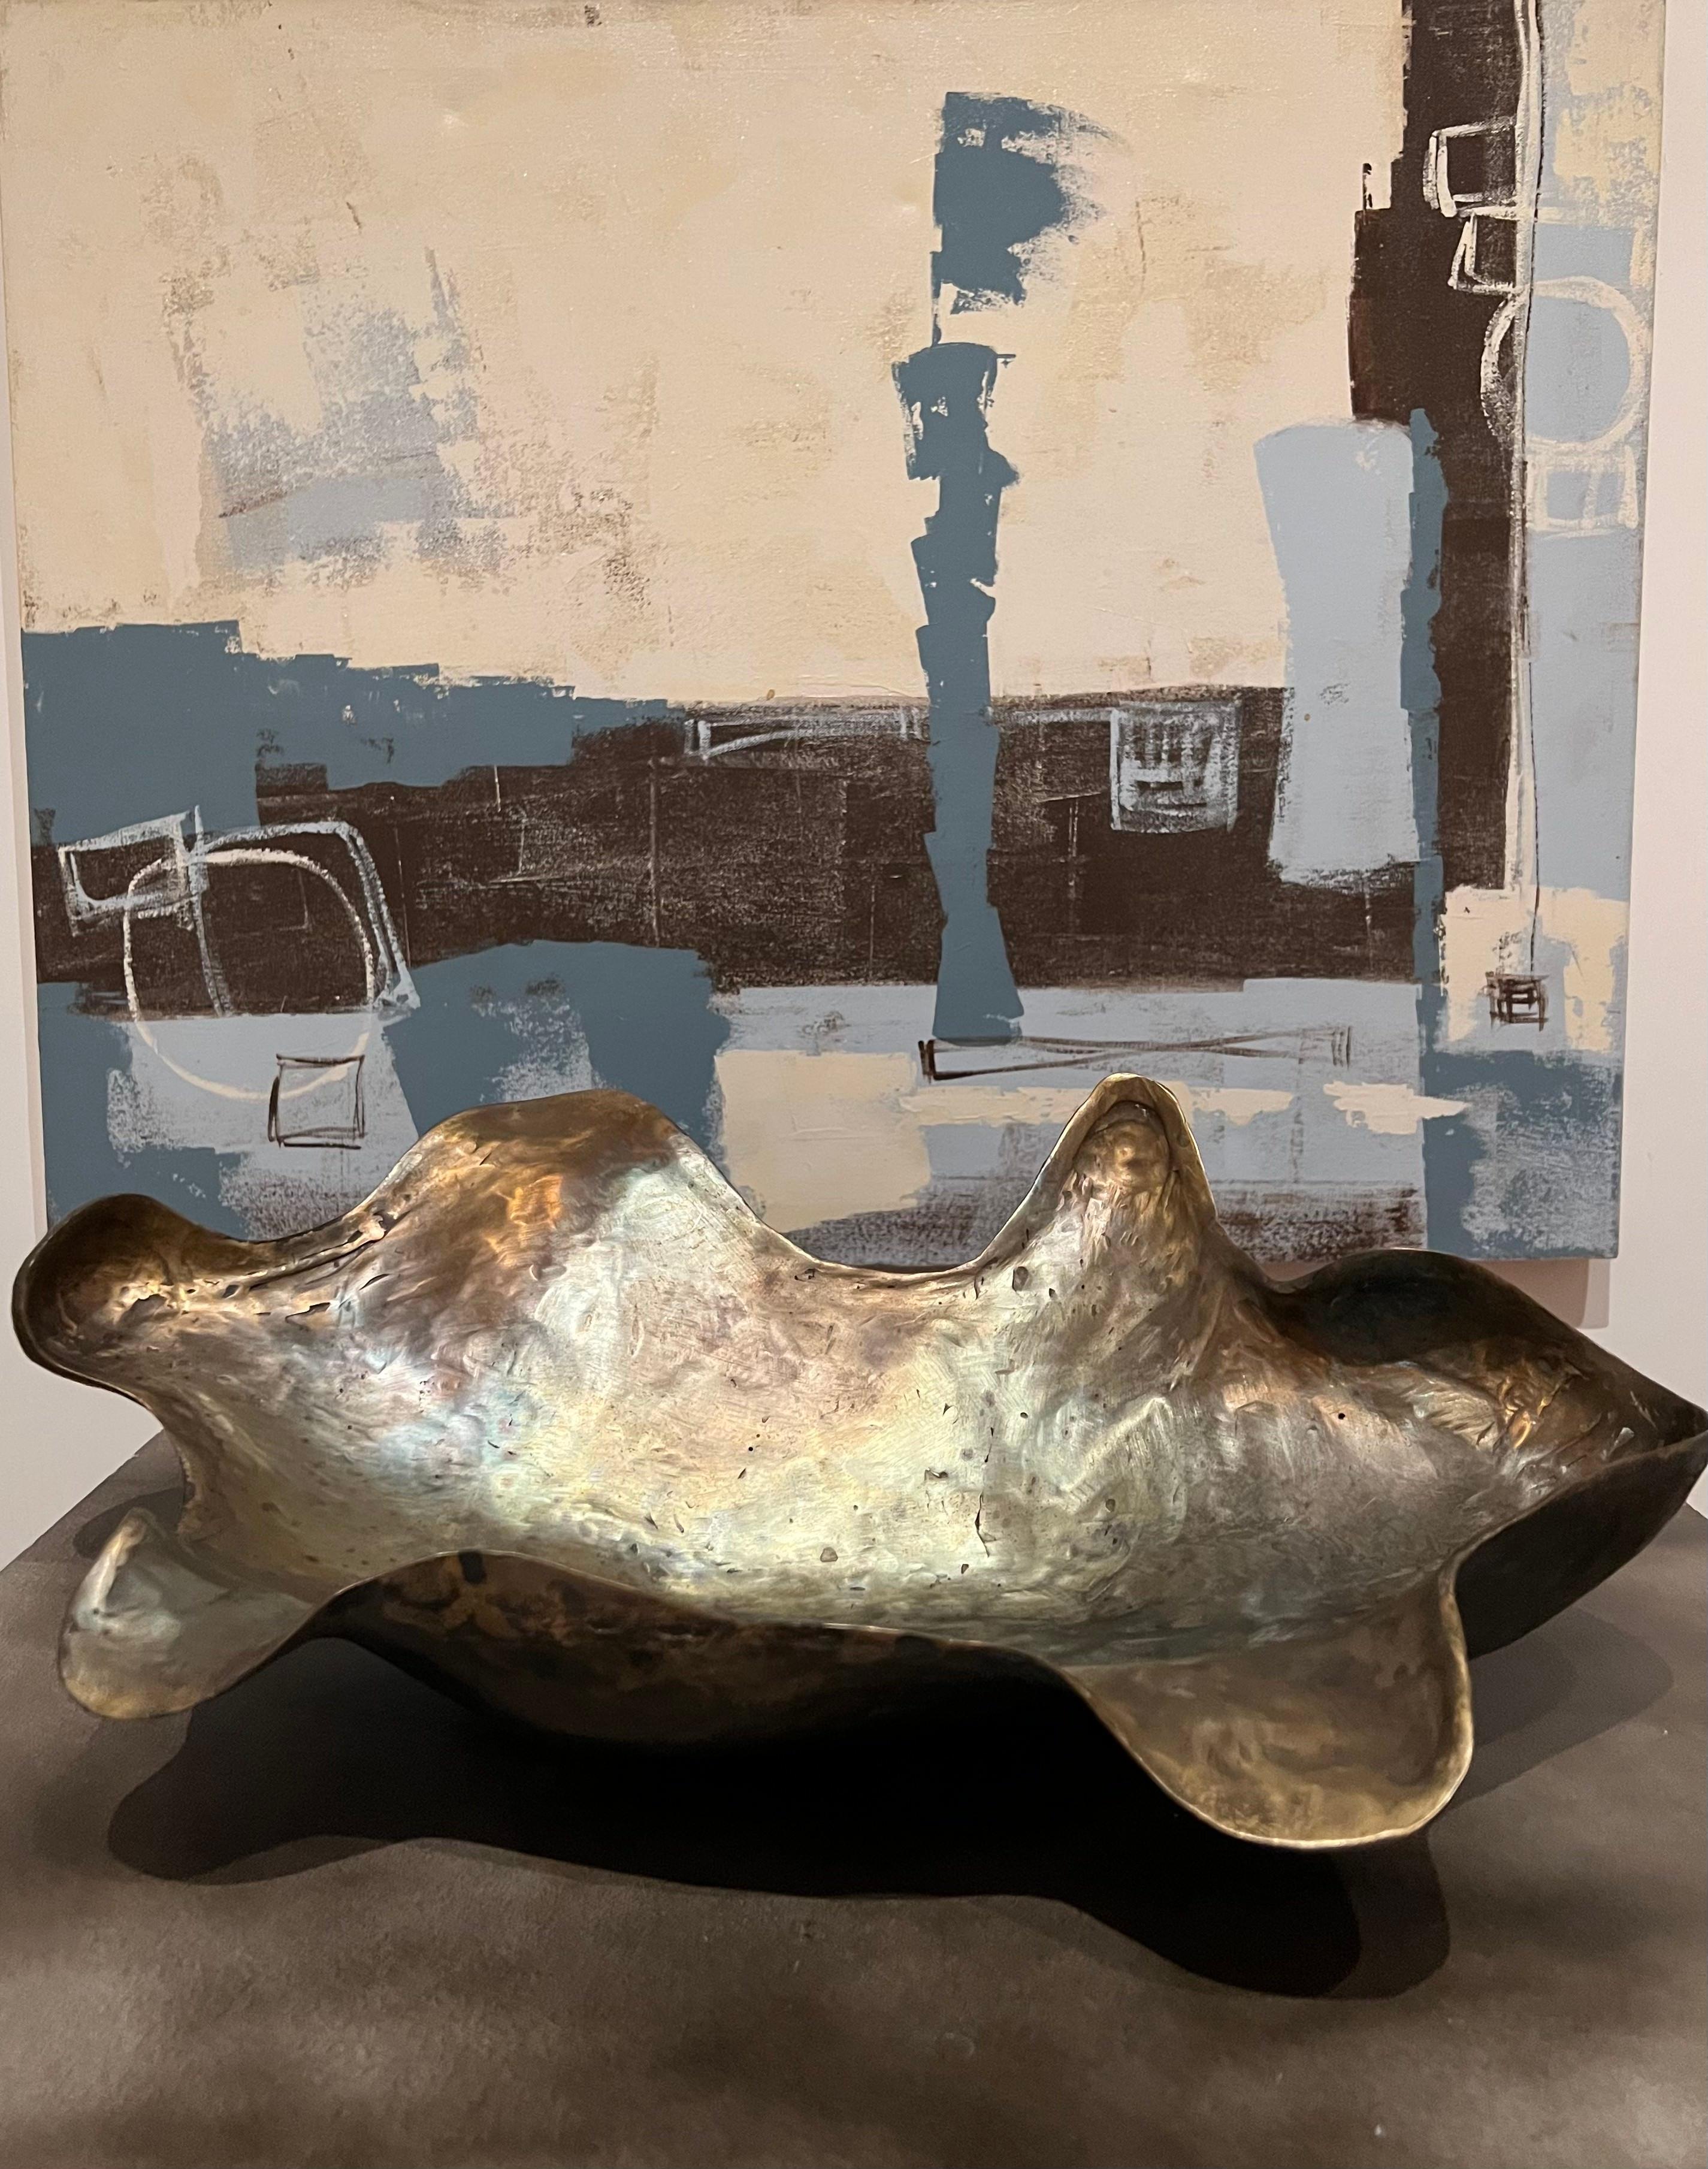  Bronze sculptural bowl, 'Tortolina 1' For Sale 2